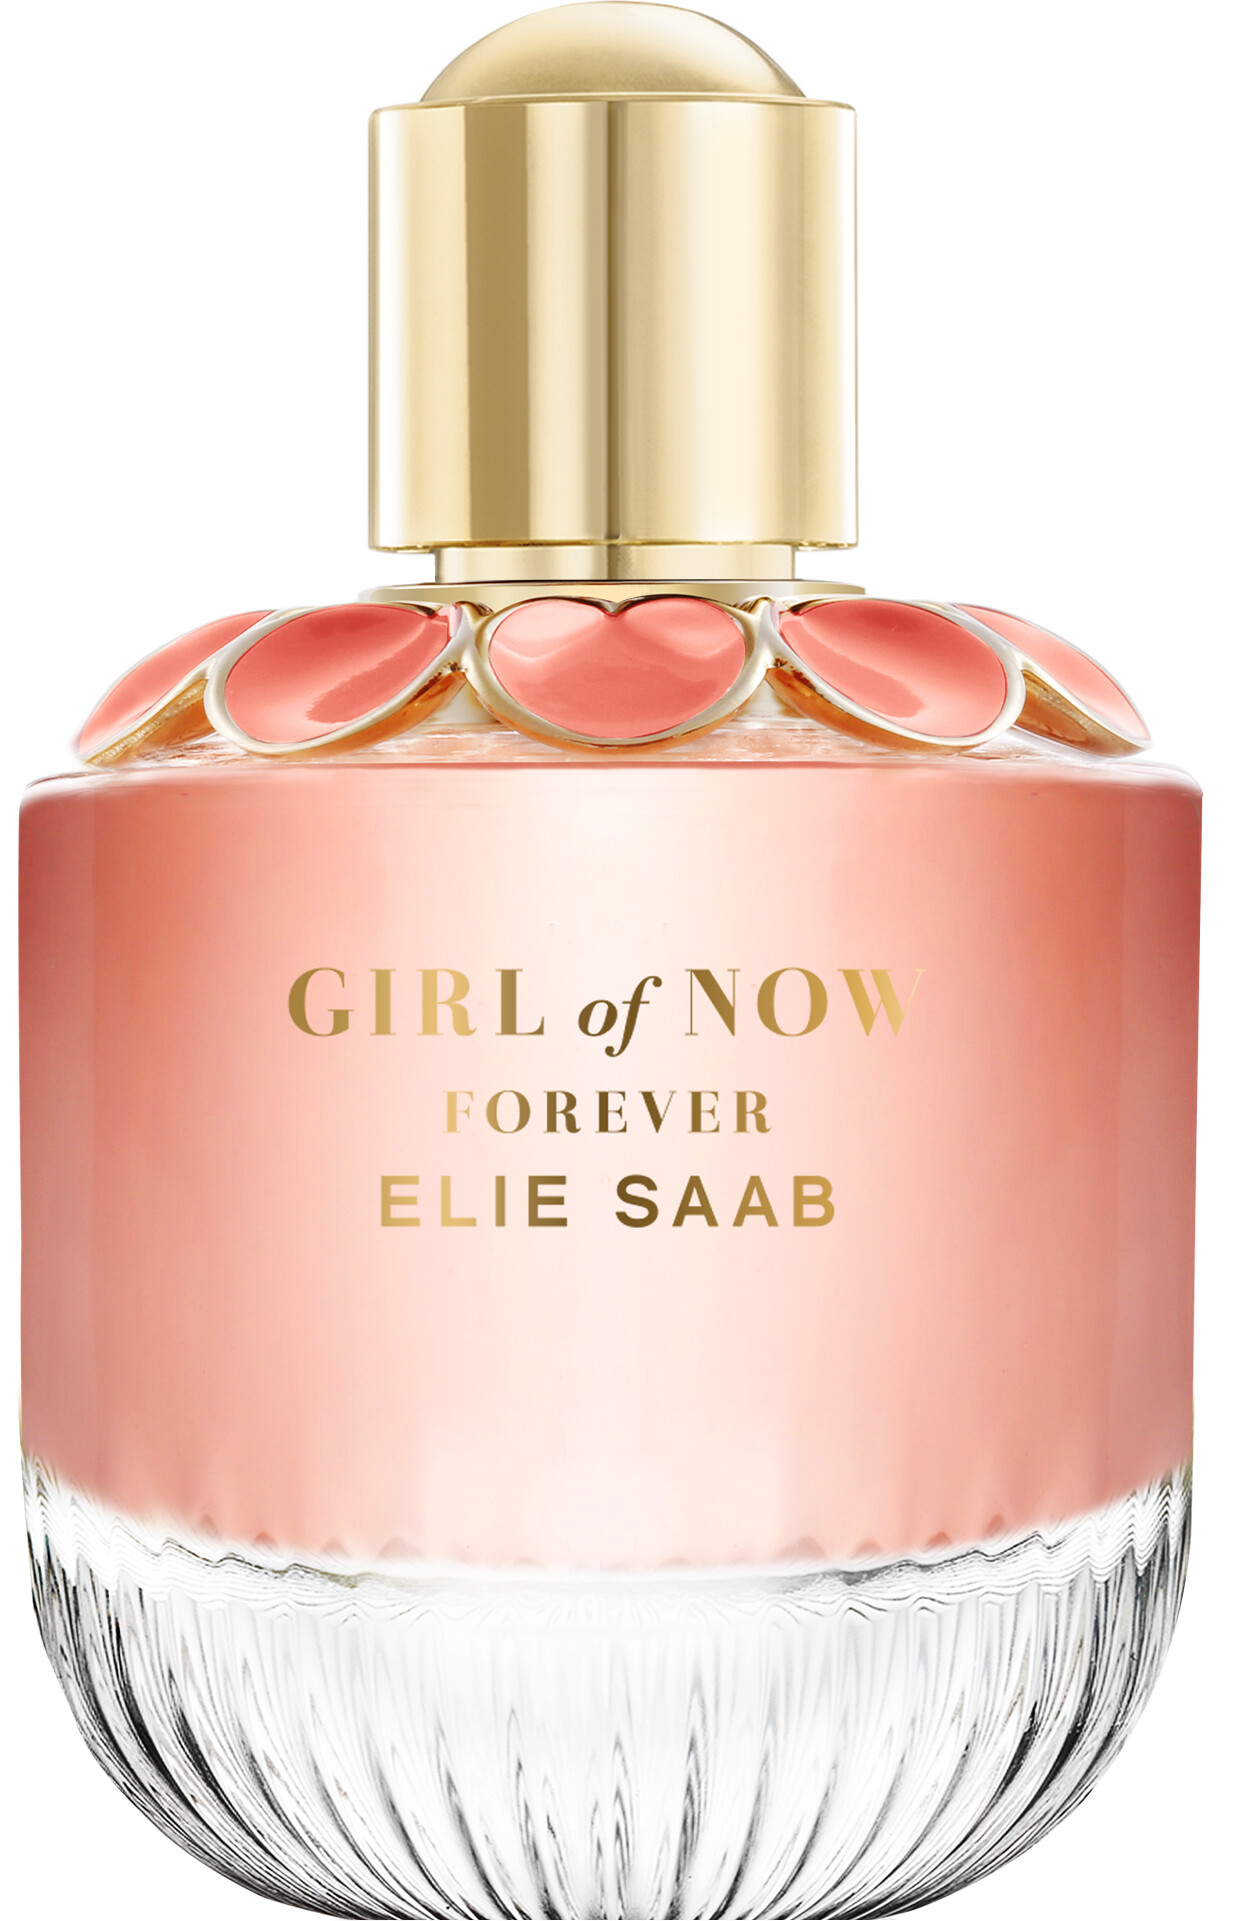 Elie Saab Girl of Now Forever Eau de Parfum Spray 90ml